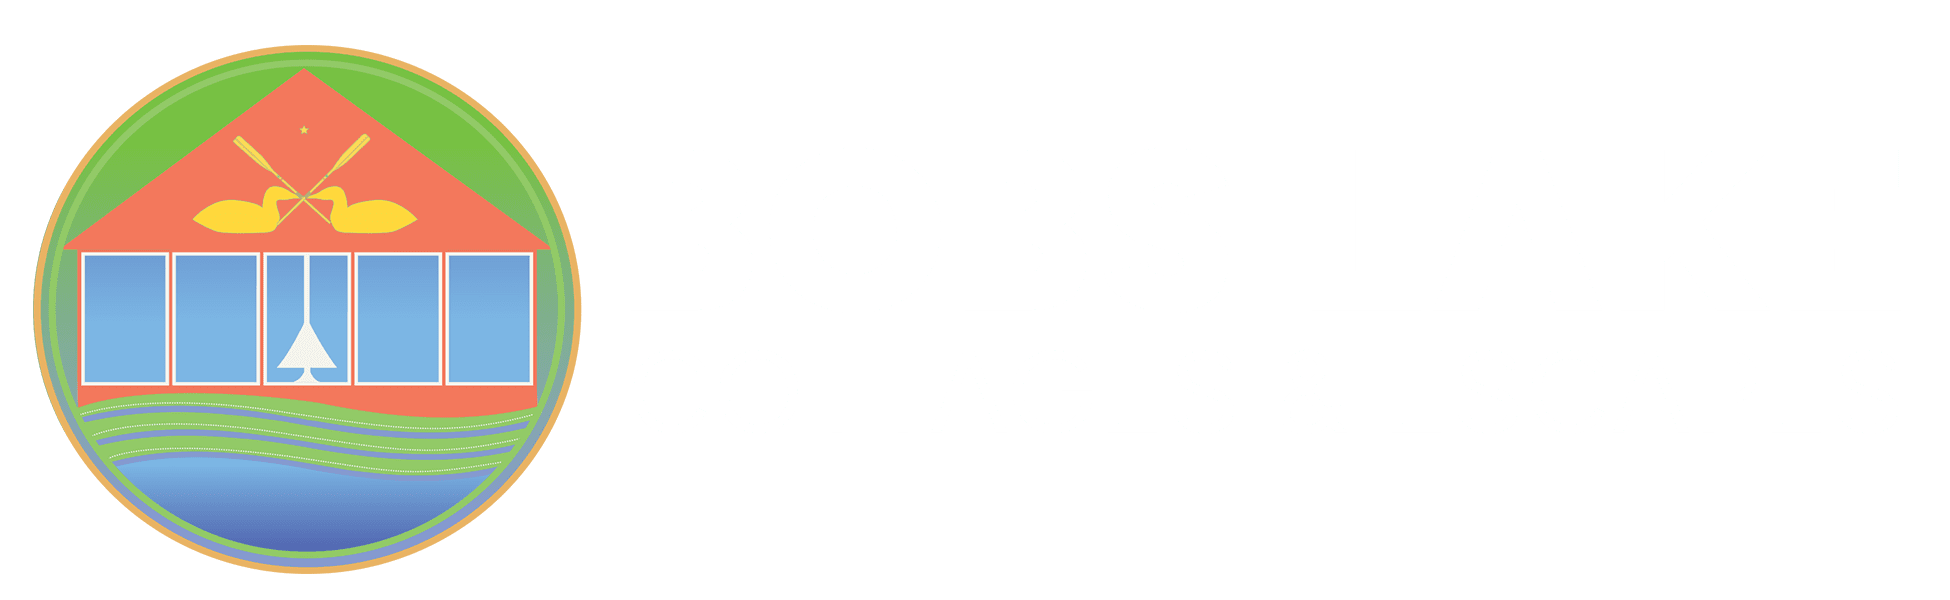 Bobs Lake Cottages & Escapes